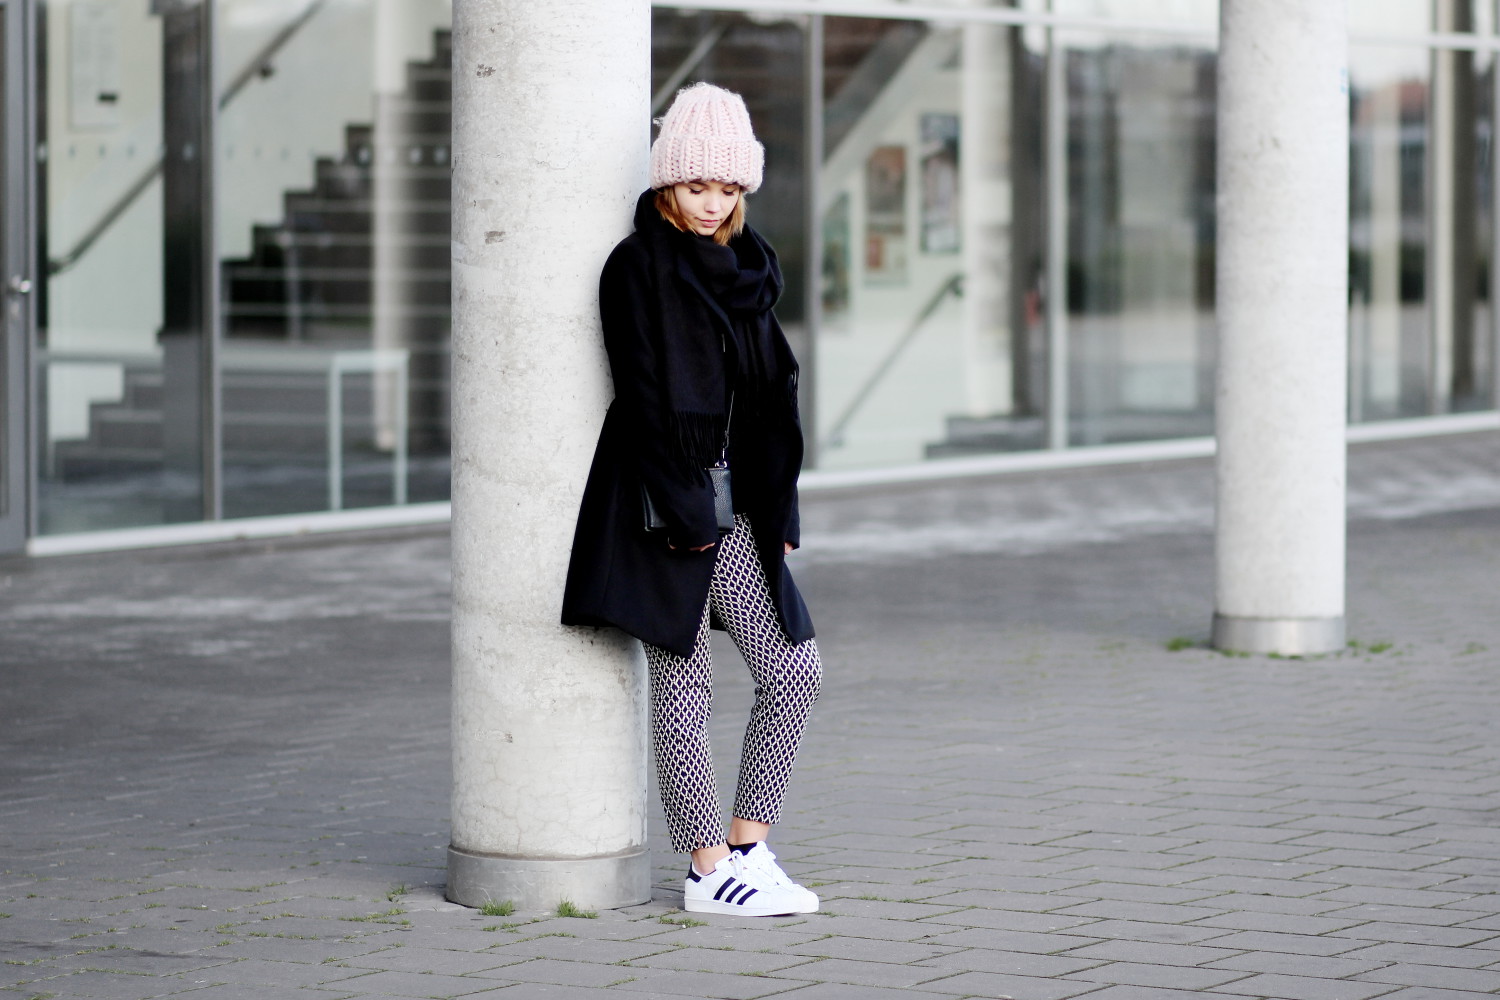 bezauberndenana-fashionblog-modeblog-outfit-streetstyle-adidas-superstars-xxl-beanie-schwarzer-mantel-casual-winter (3)